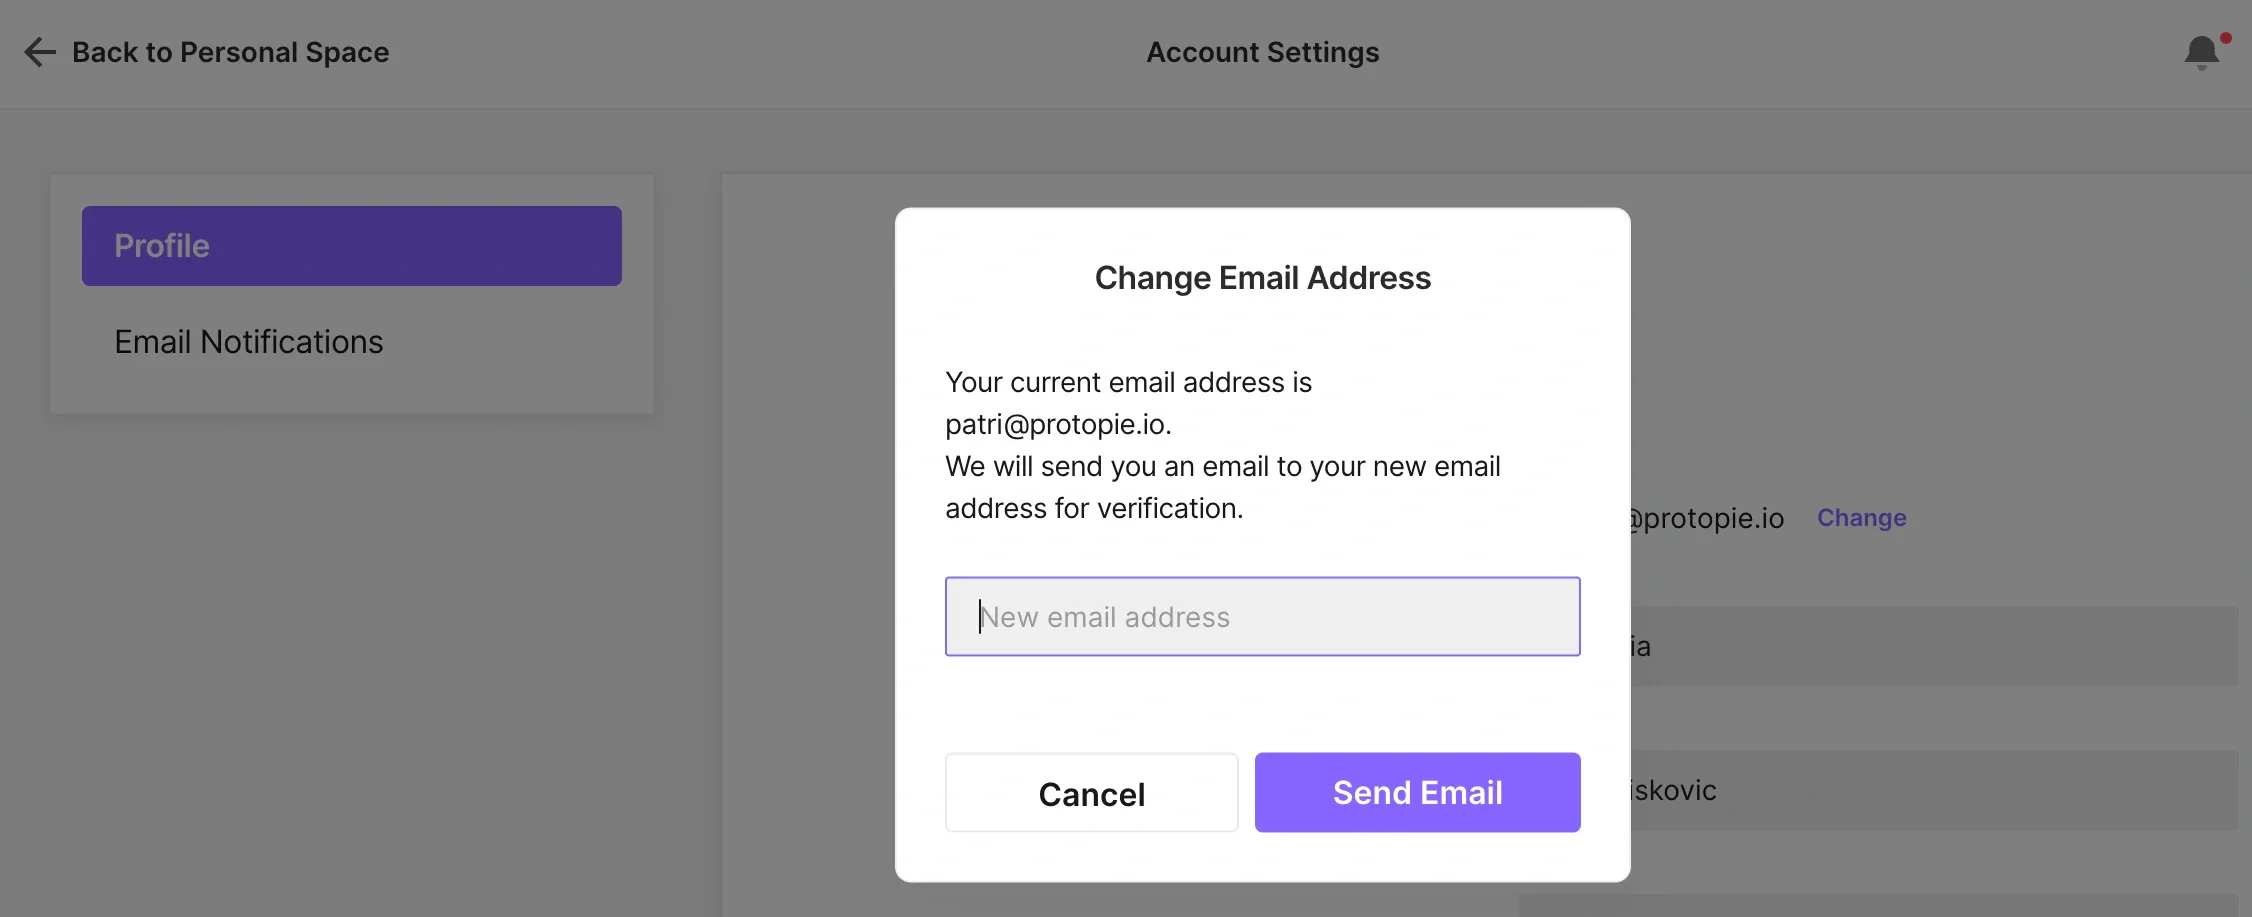 change-email-address